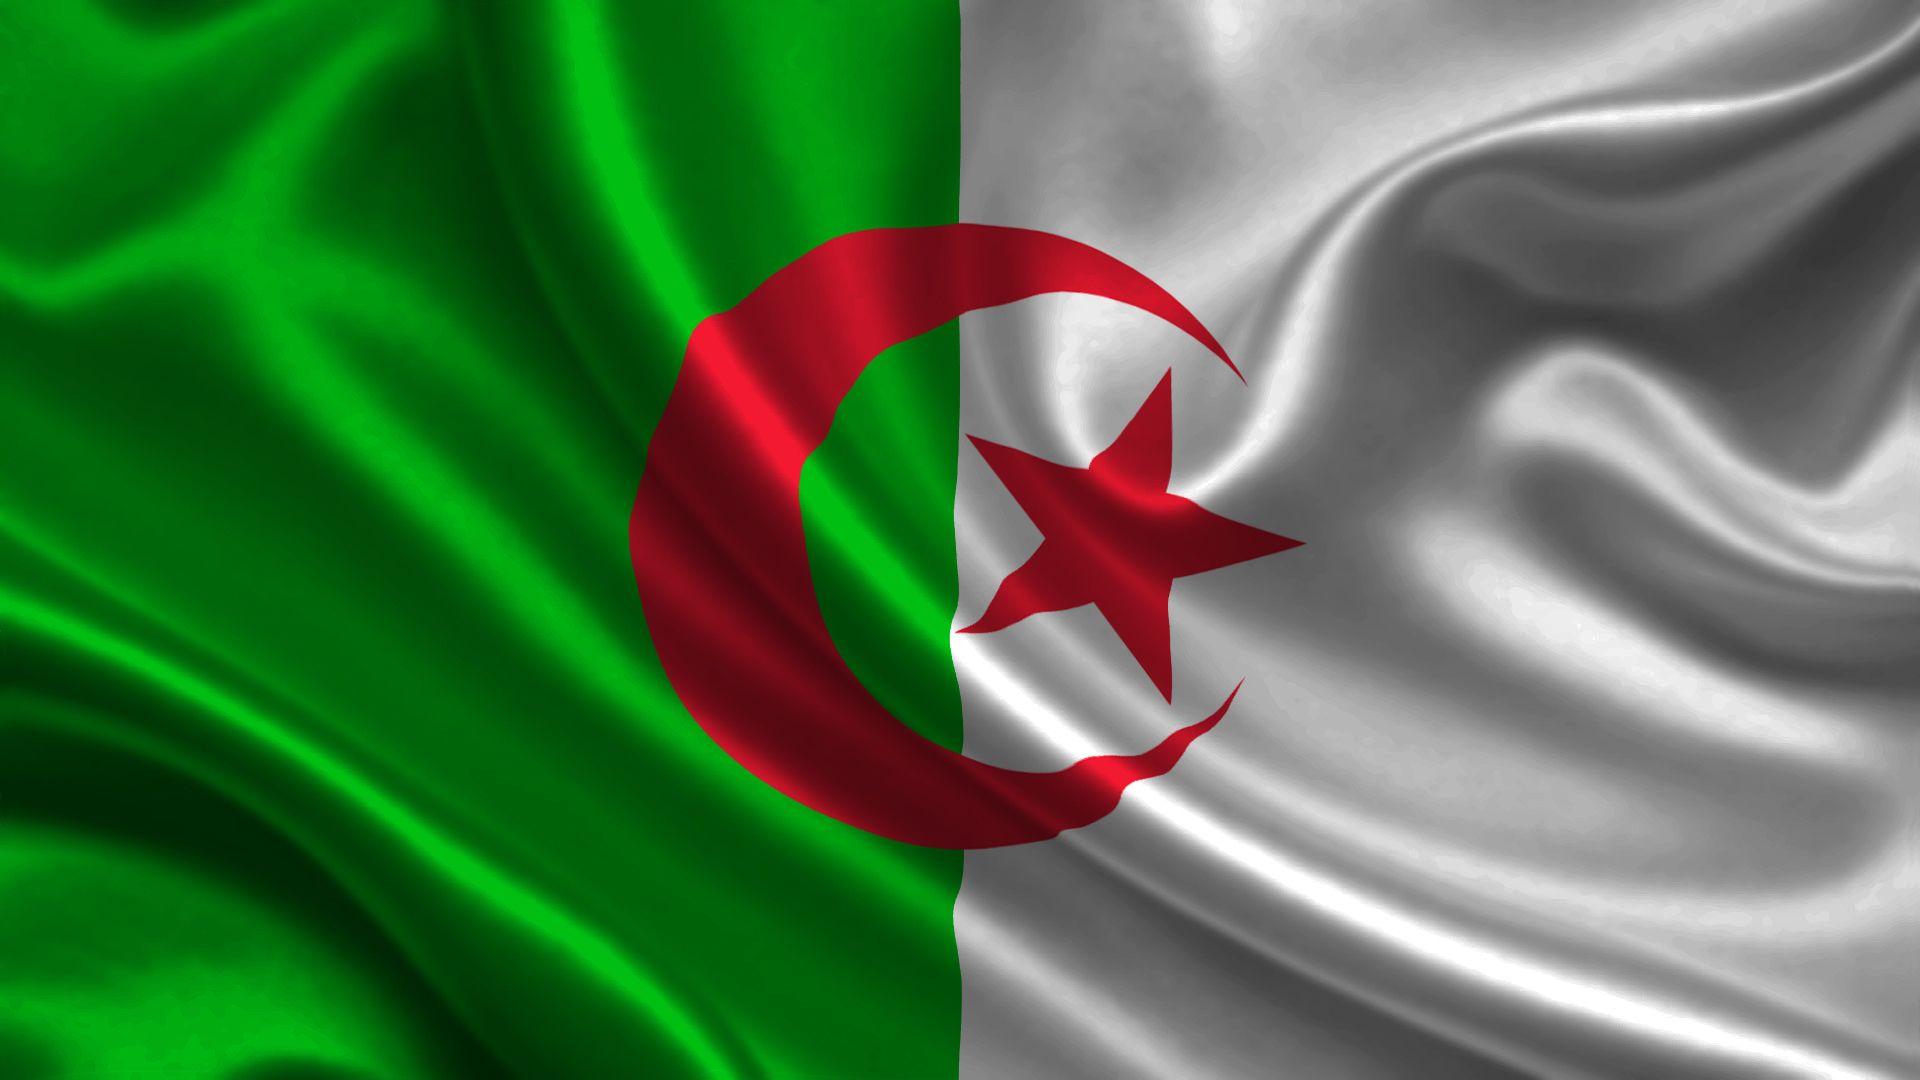 Wallpaper Algeria Algiers City Picture 1366x768 #algeria